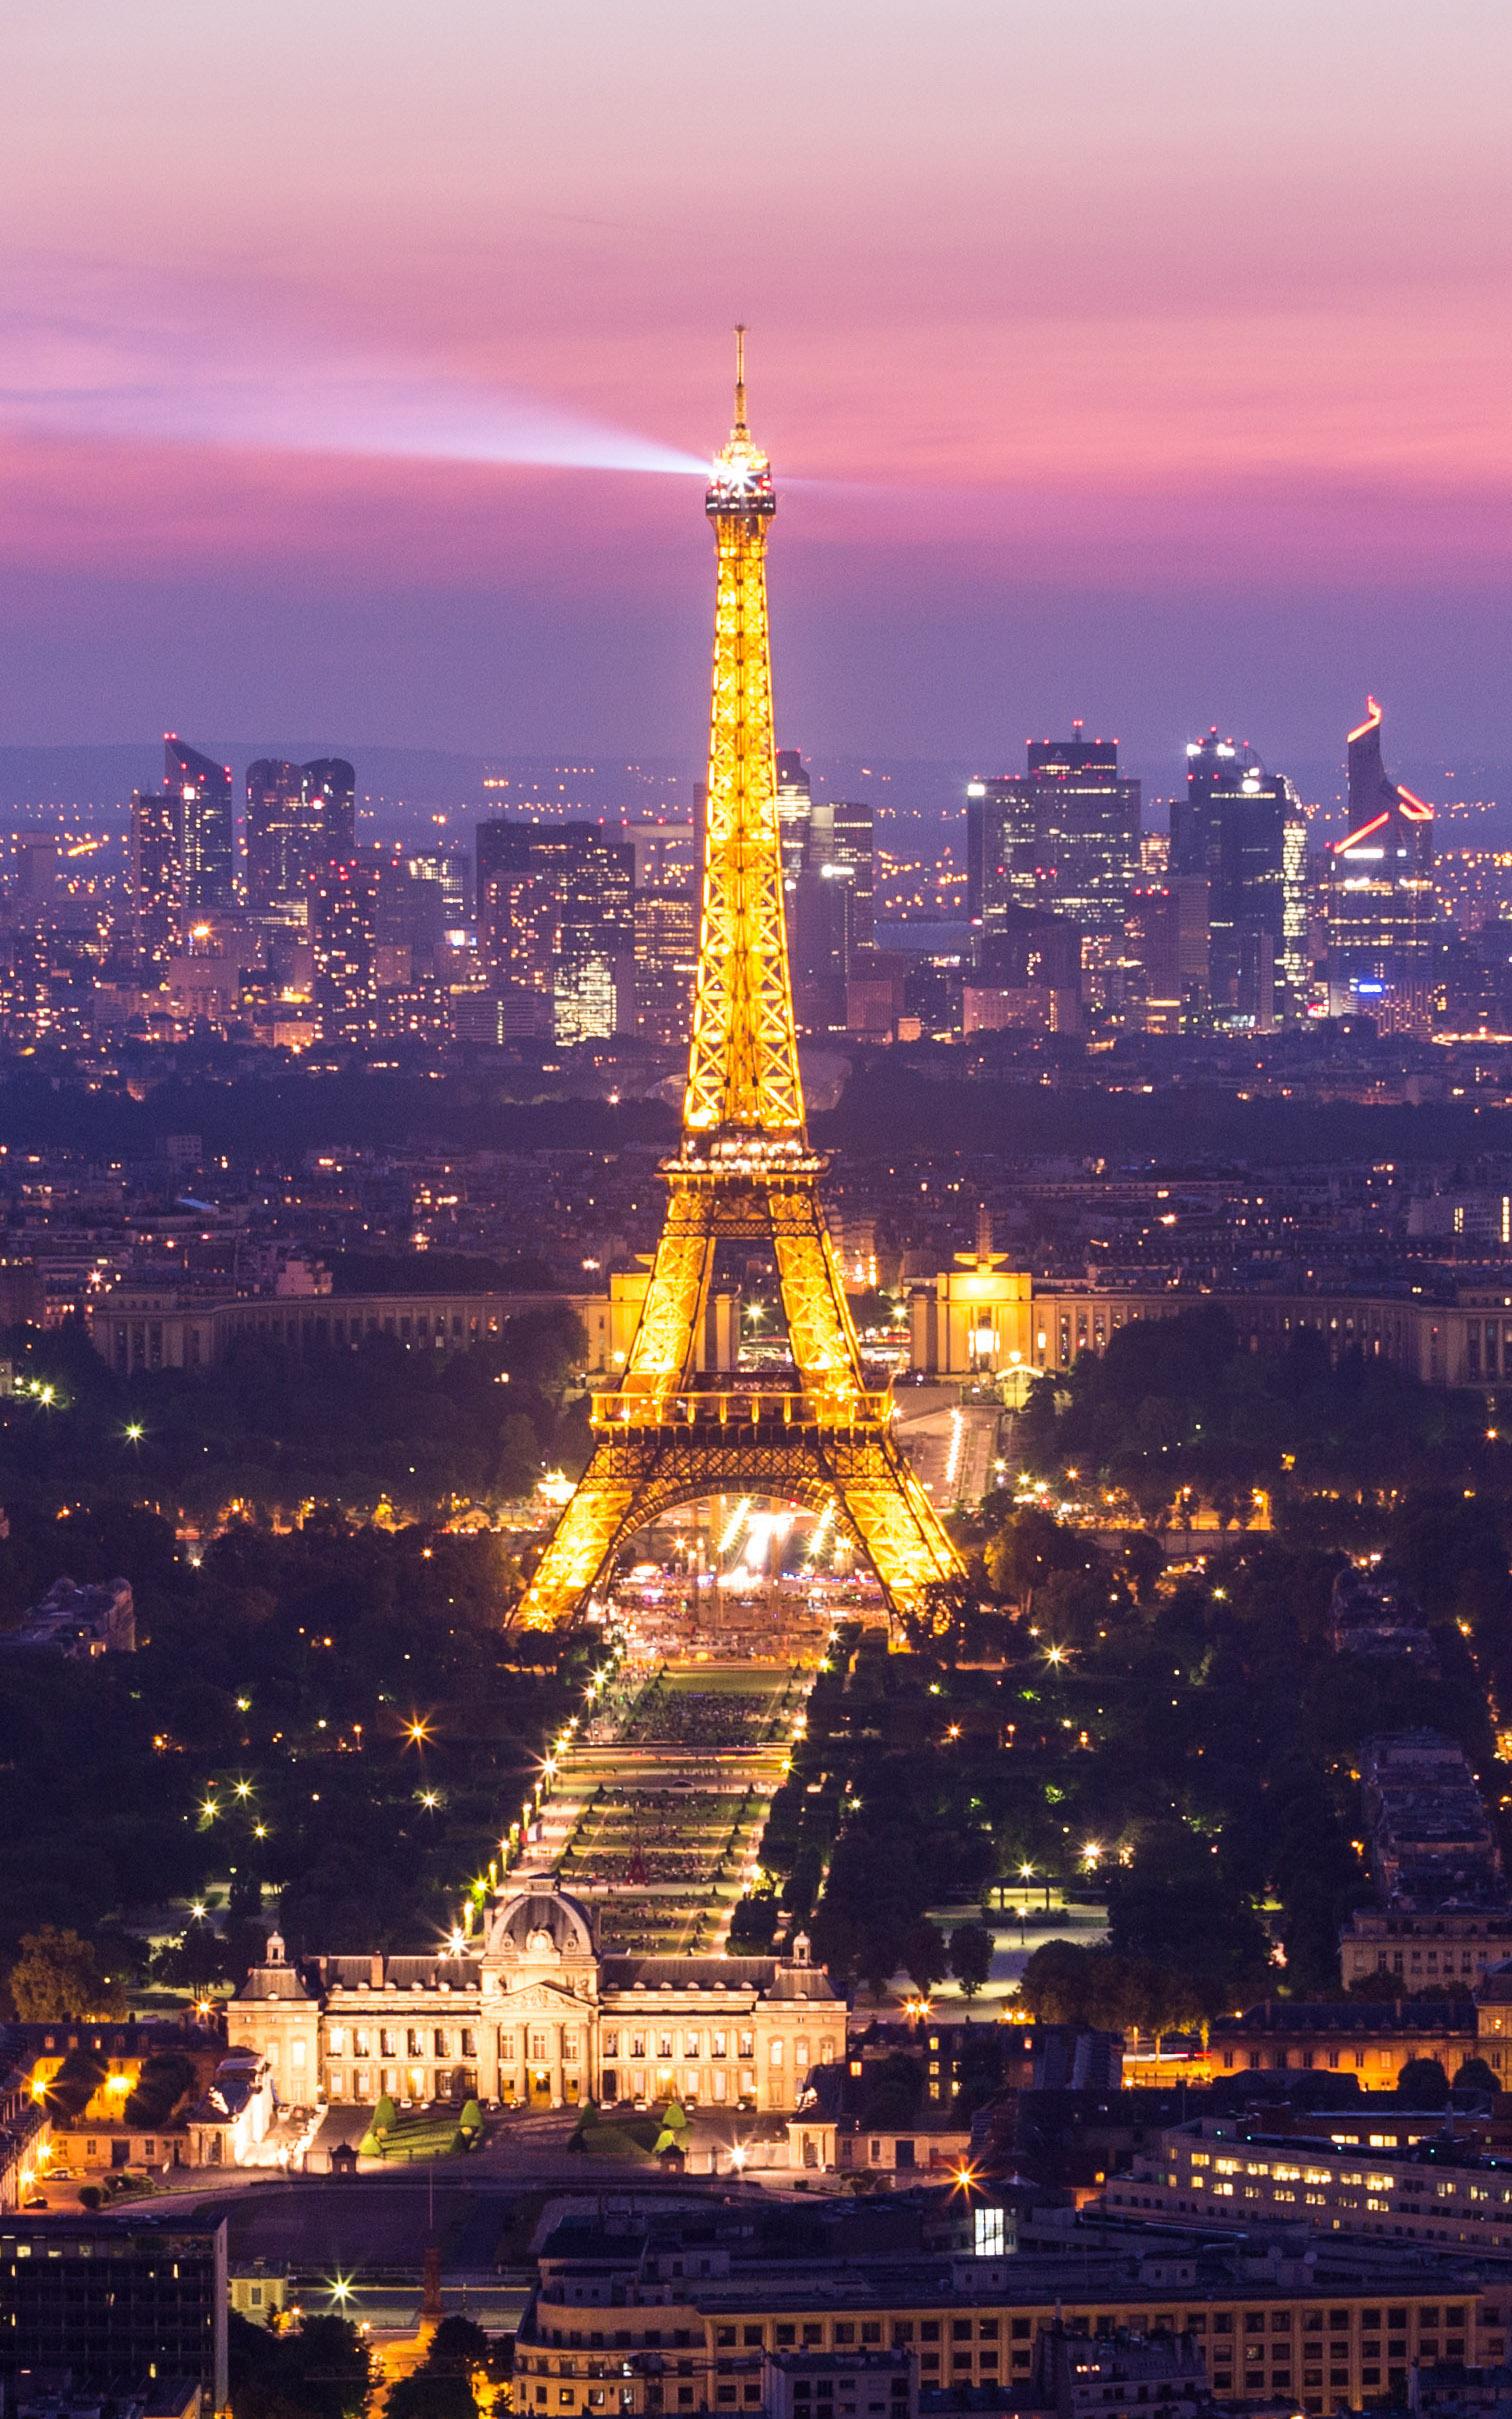 Beautiful News - Aerial shot of Paris in twilight